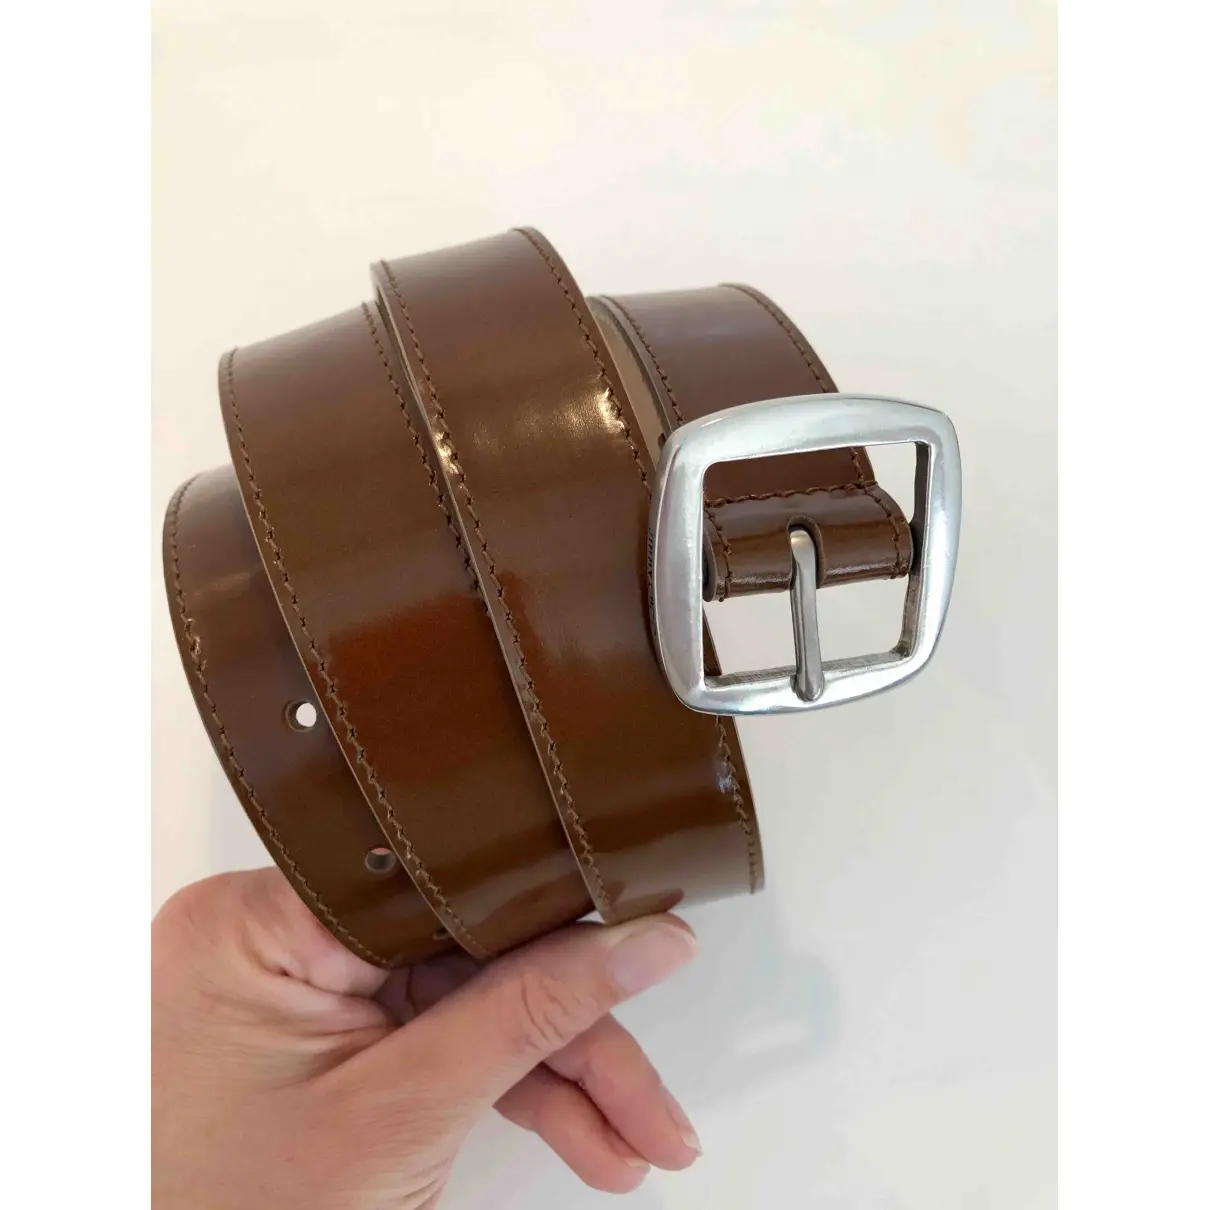 Buy Jimmy Choo Patent leather belt online